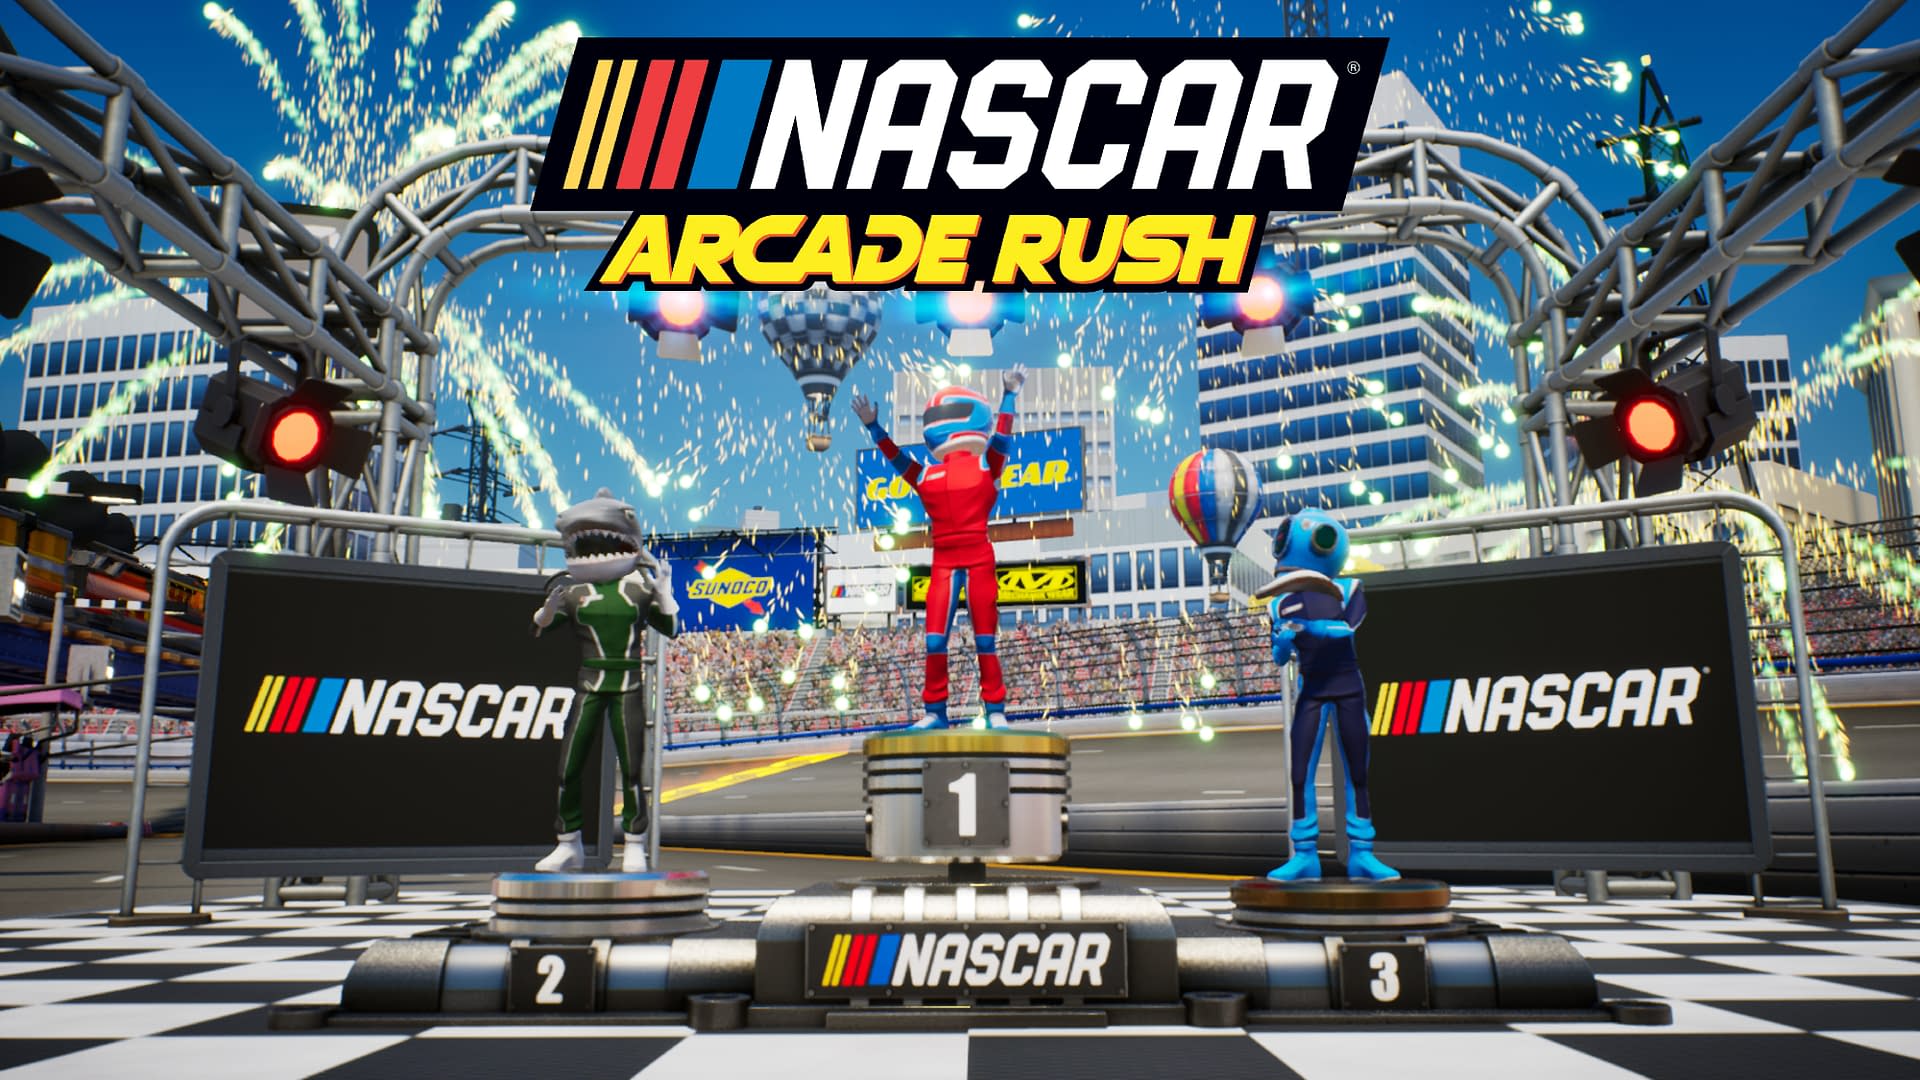 NASCAR Arcade Rush Confirmed For Mid-September